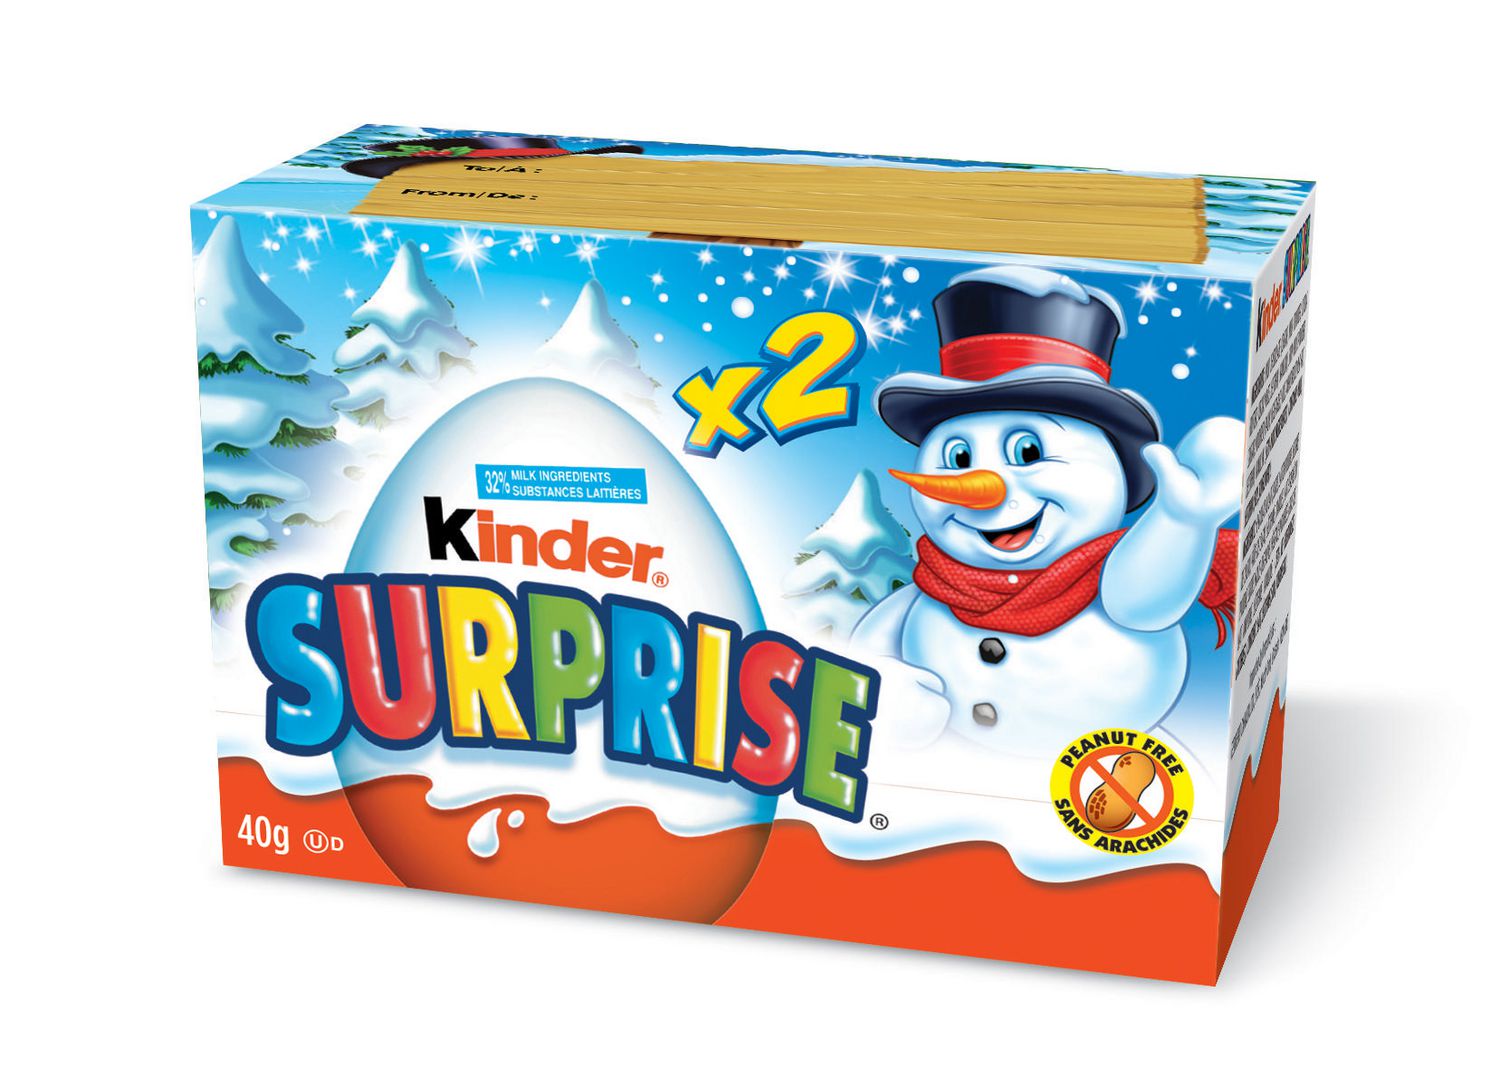 Kinder Surprise Chocolate Treat Christmas Box Walmart Canada